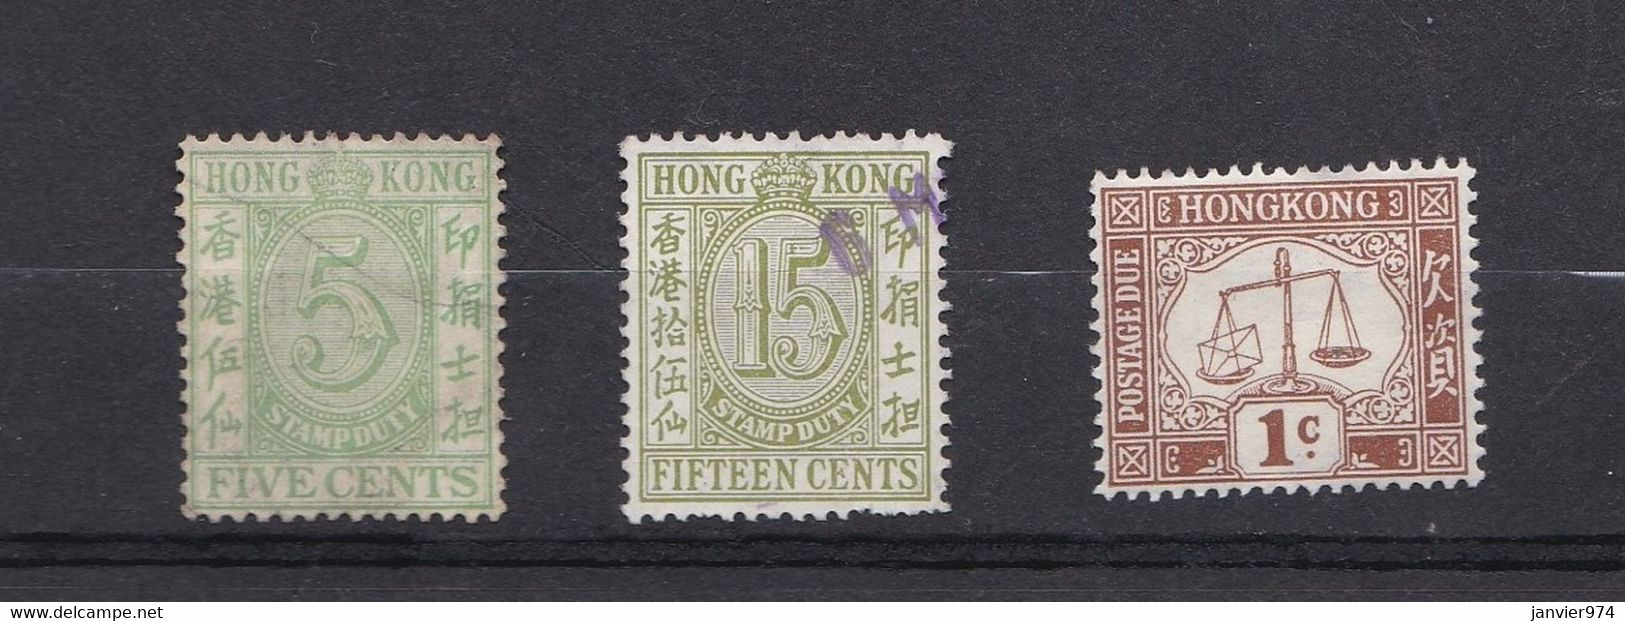 Hong Kong 2 Timbres 5 Cent Et 15 Cents 1938 + Un Timbre Taxe 1924, Voir Scan - Sellos Fiscal-postal